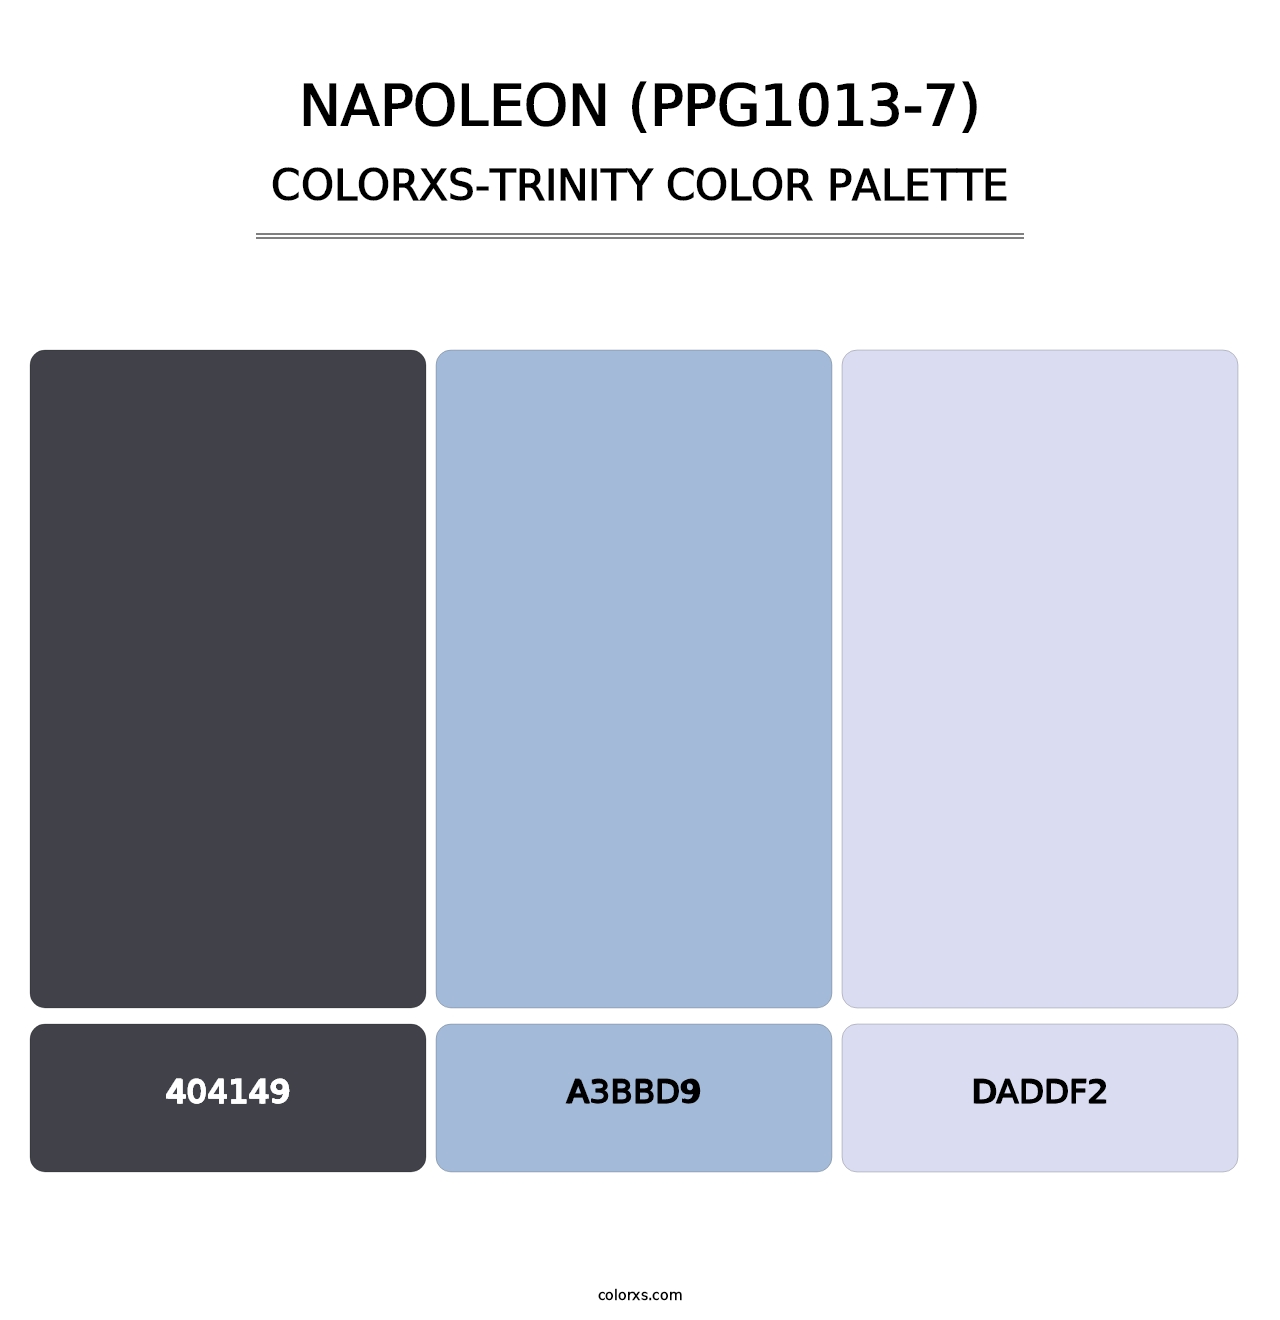 Napoleon (PPG1013-7) - Colorxs Trinity Palette